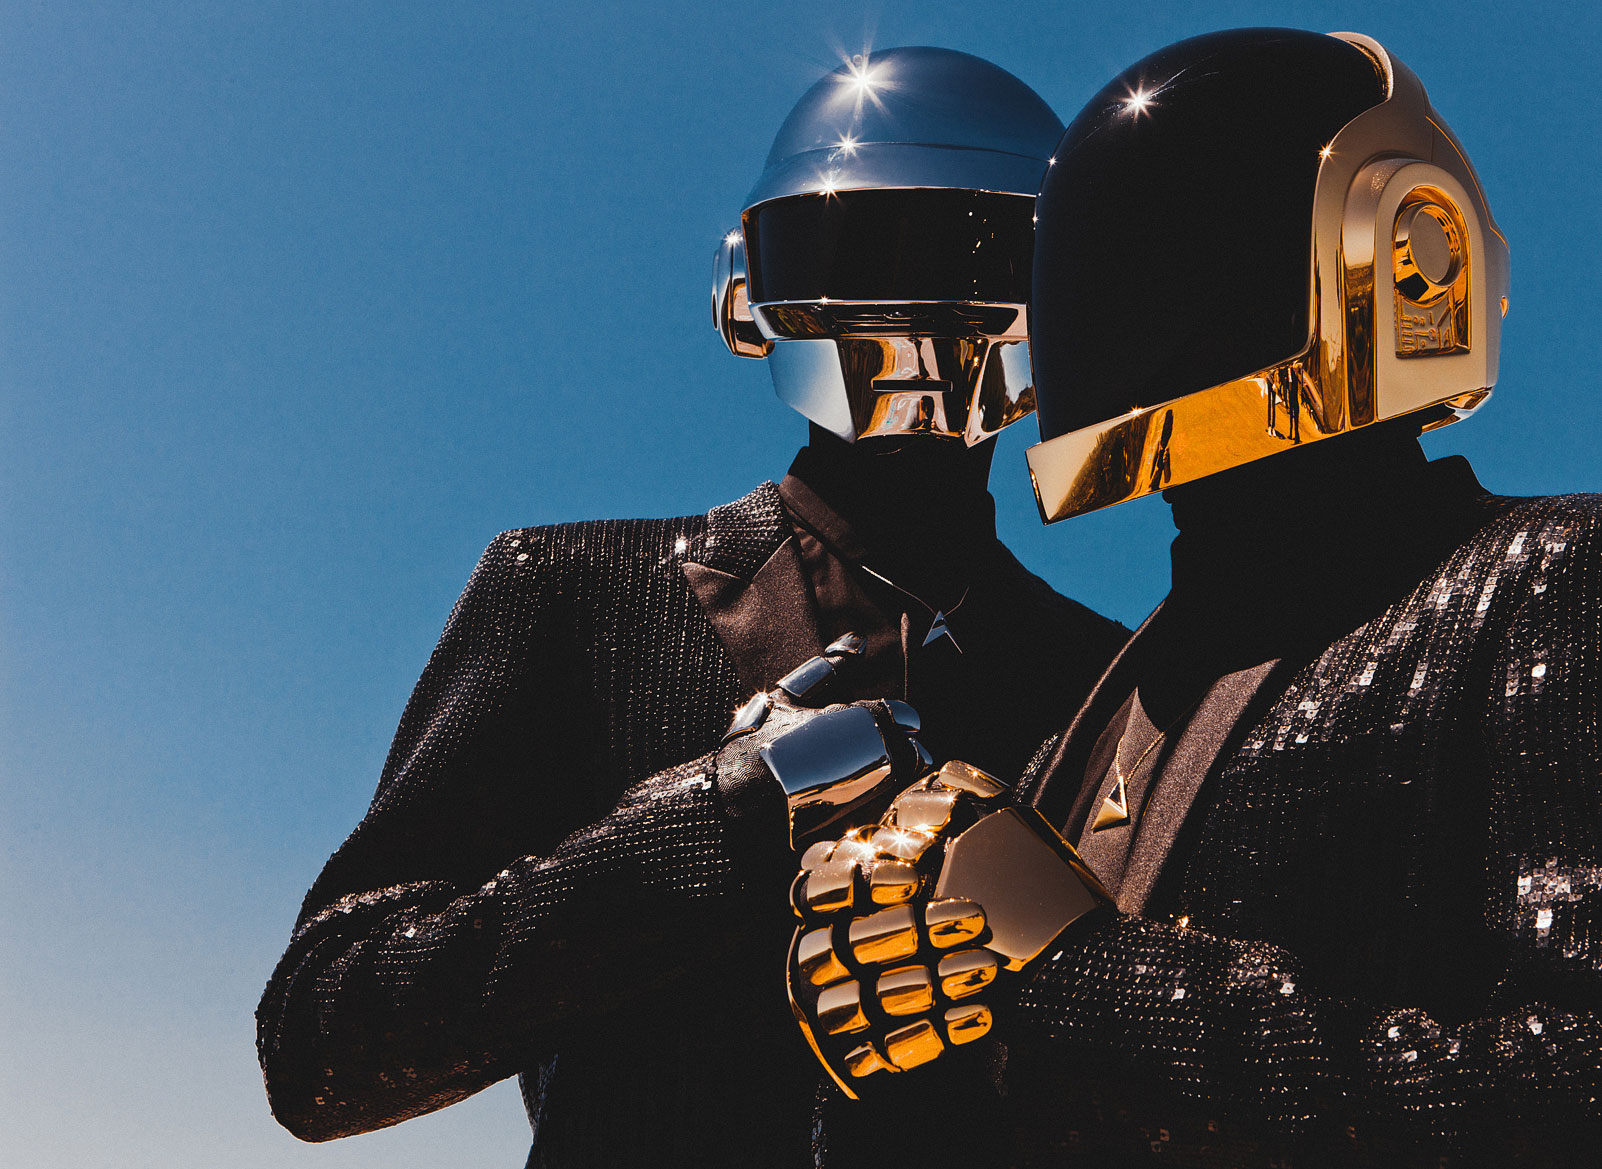 Daft Punk & Australian Band, Parcels, Drop Funky New Track “Overnight”